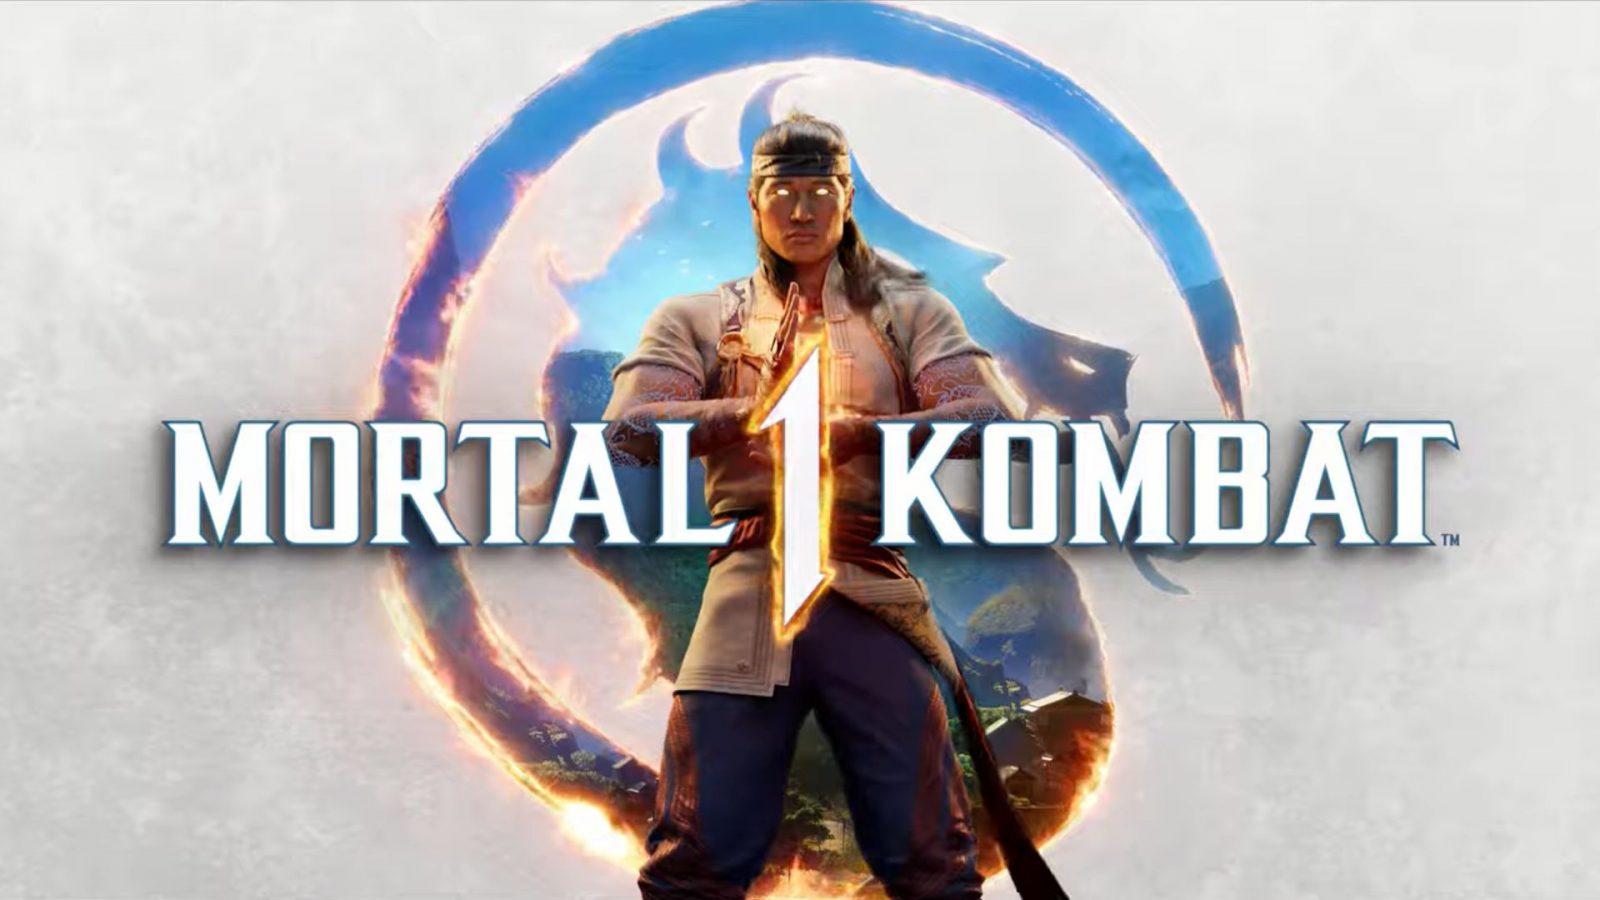 Mortal Kombat 12 trailer should start off with Scorpion and Baraka